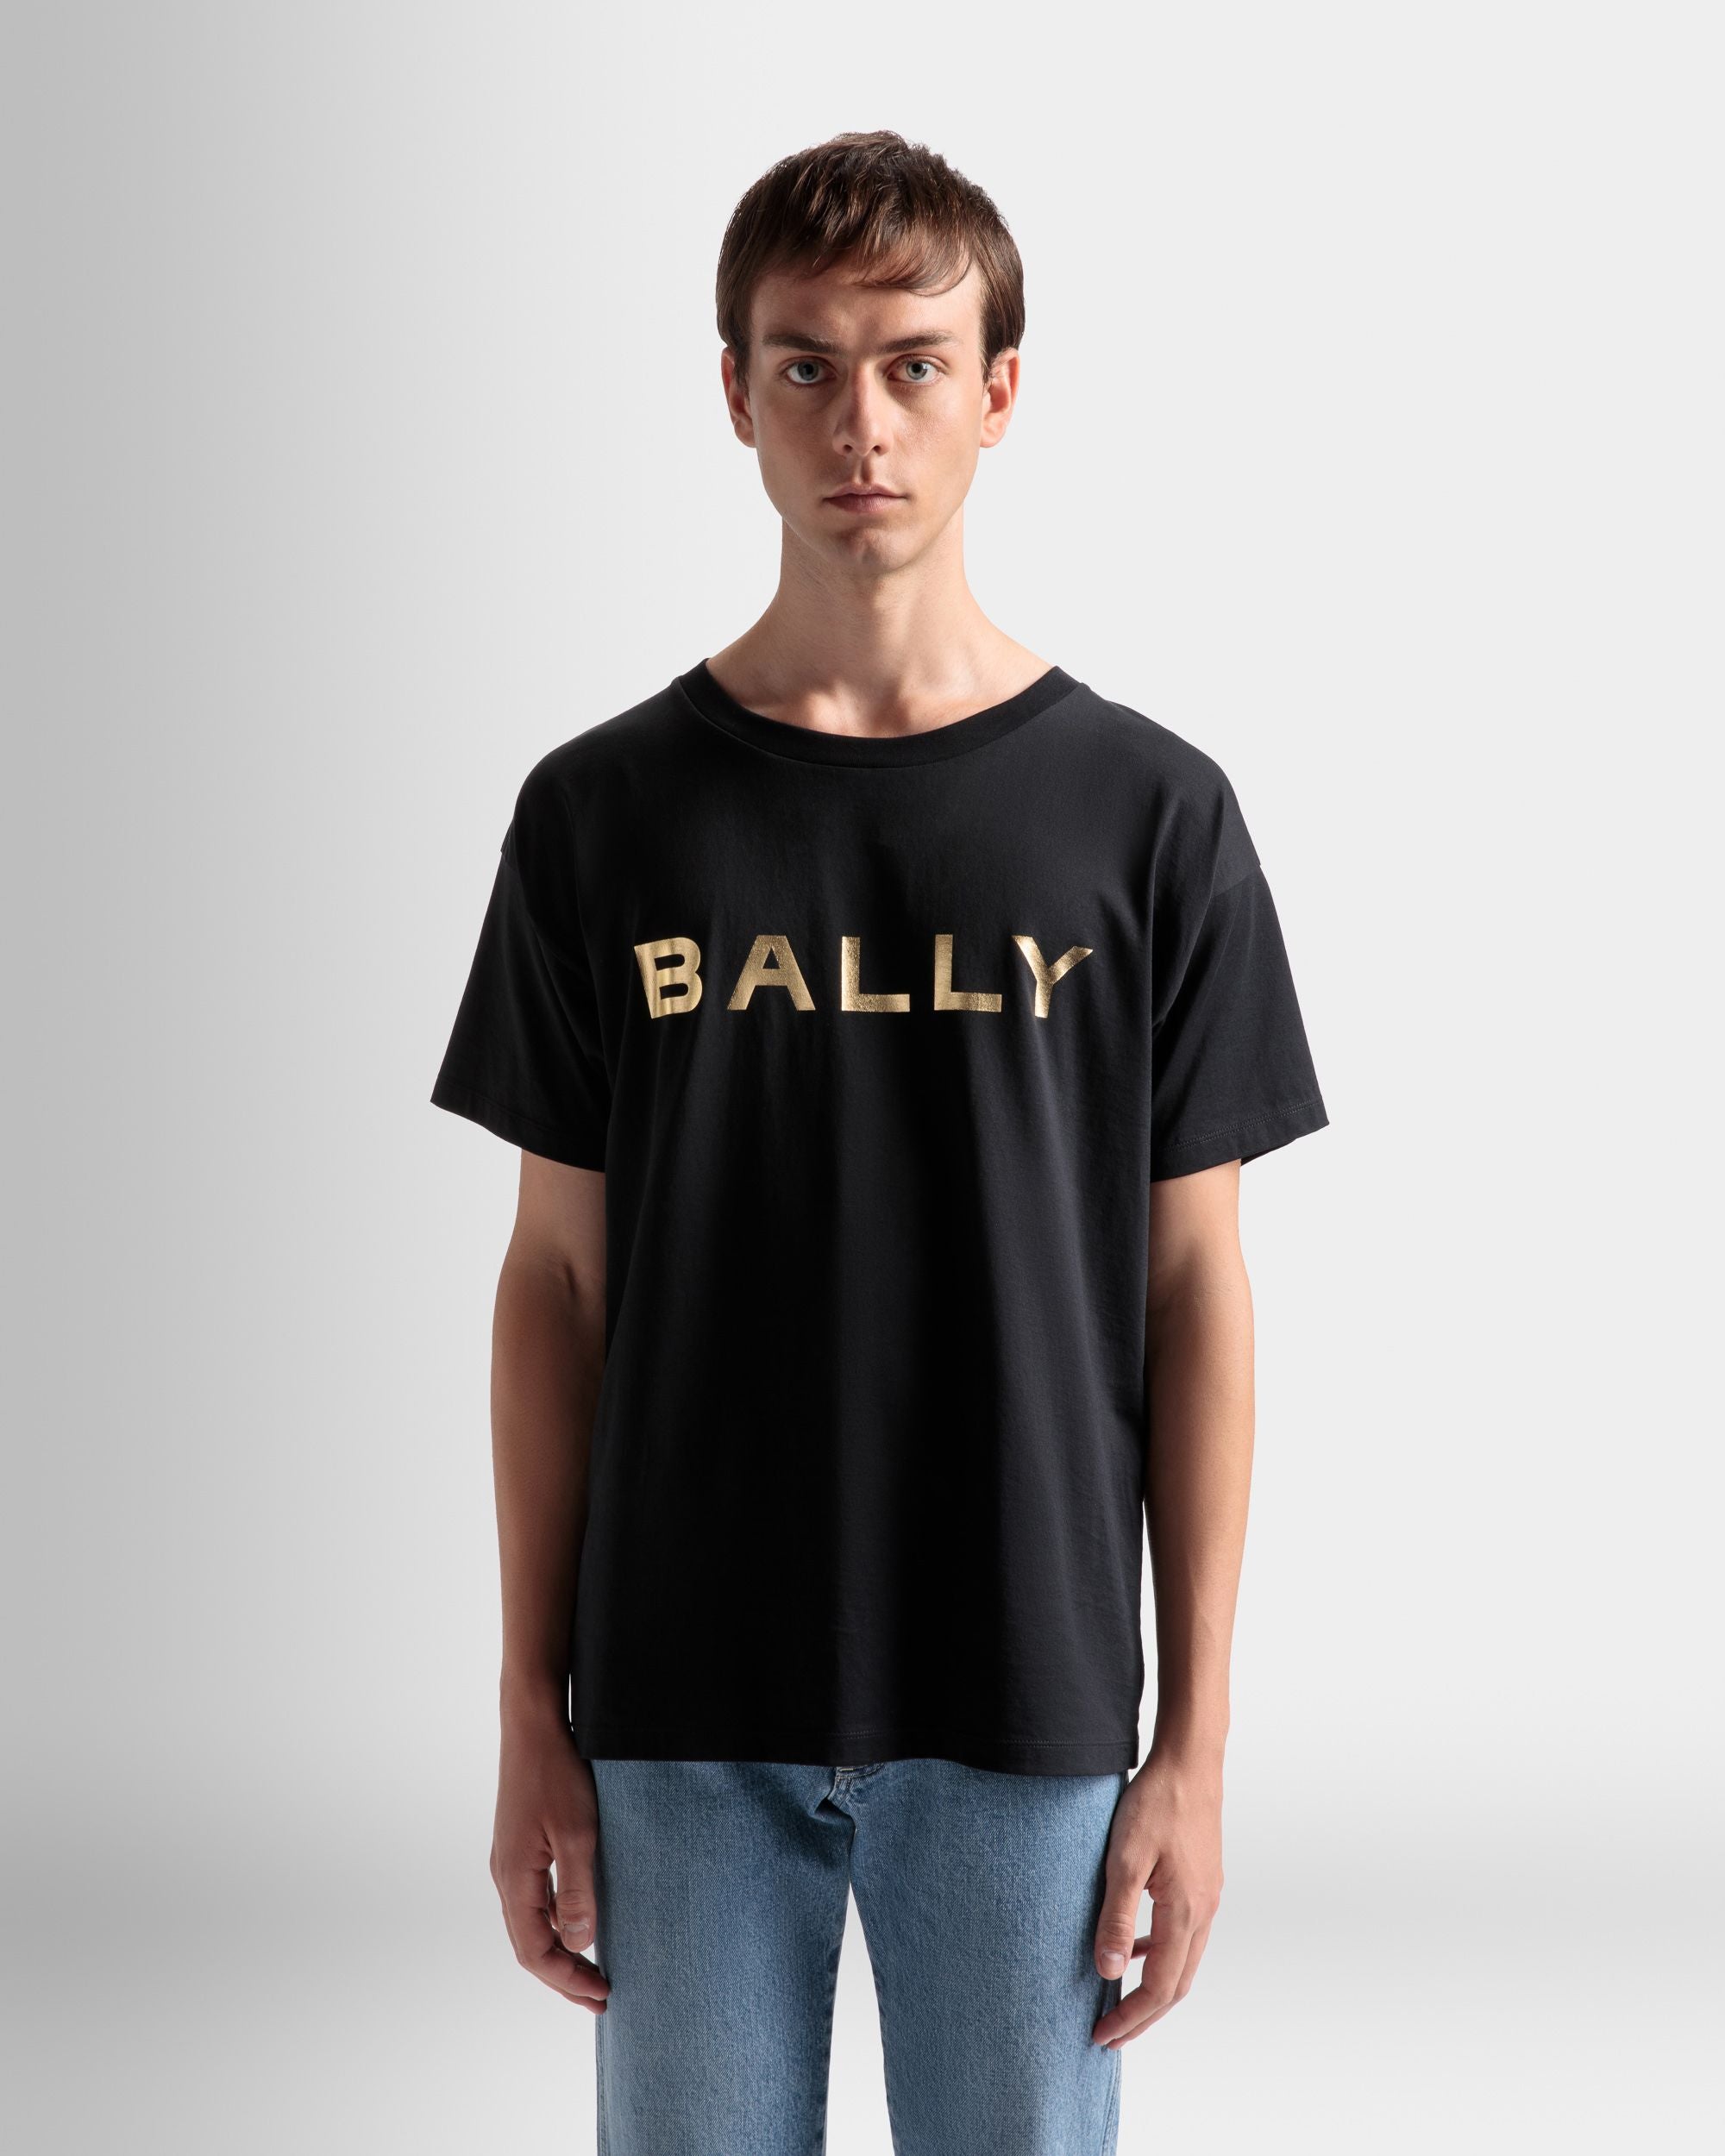 Logo T-Shirt | Men's T-Shirt | Black Cotton | Bally | On Model Close Up